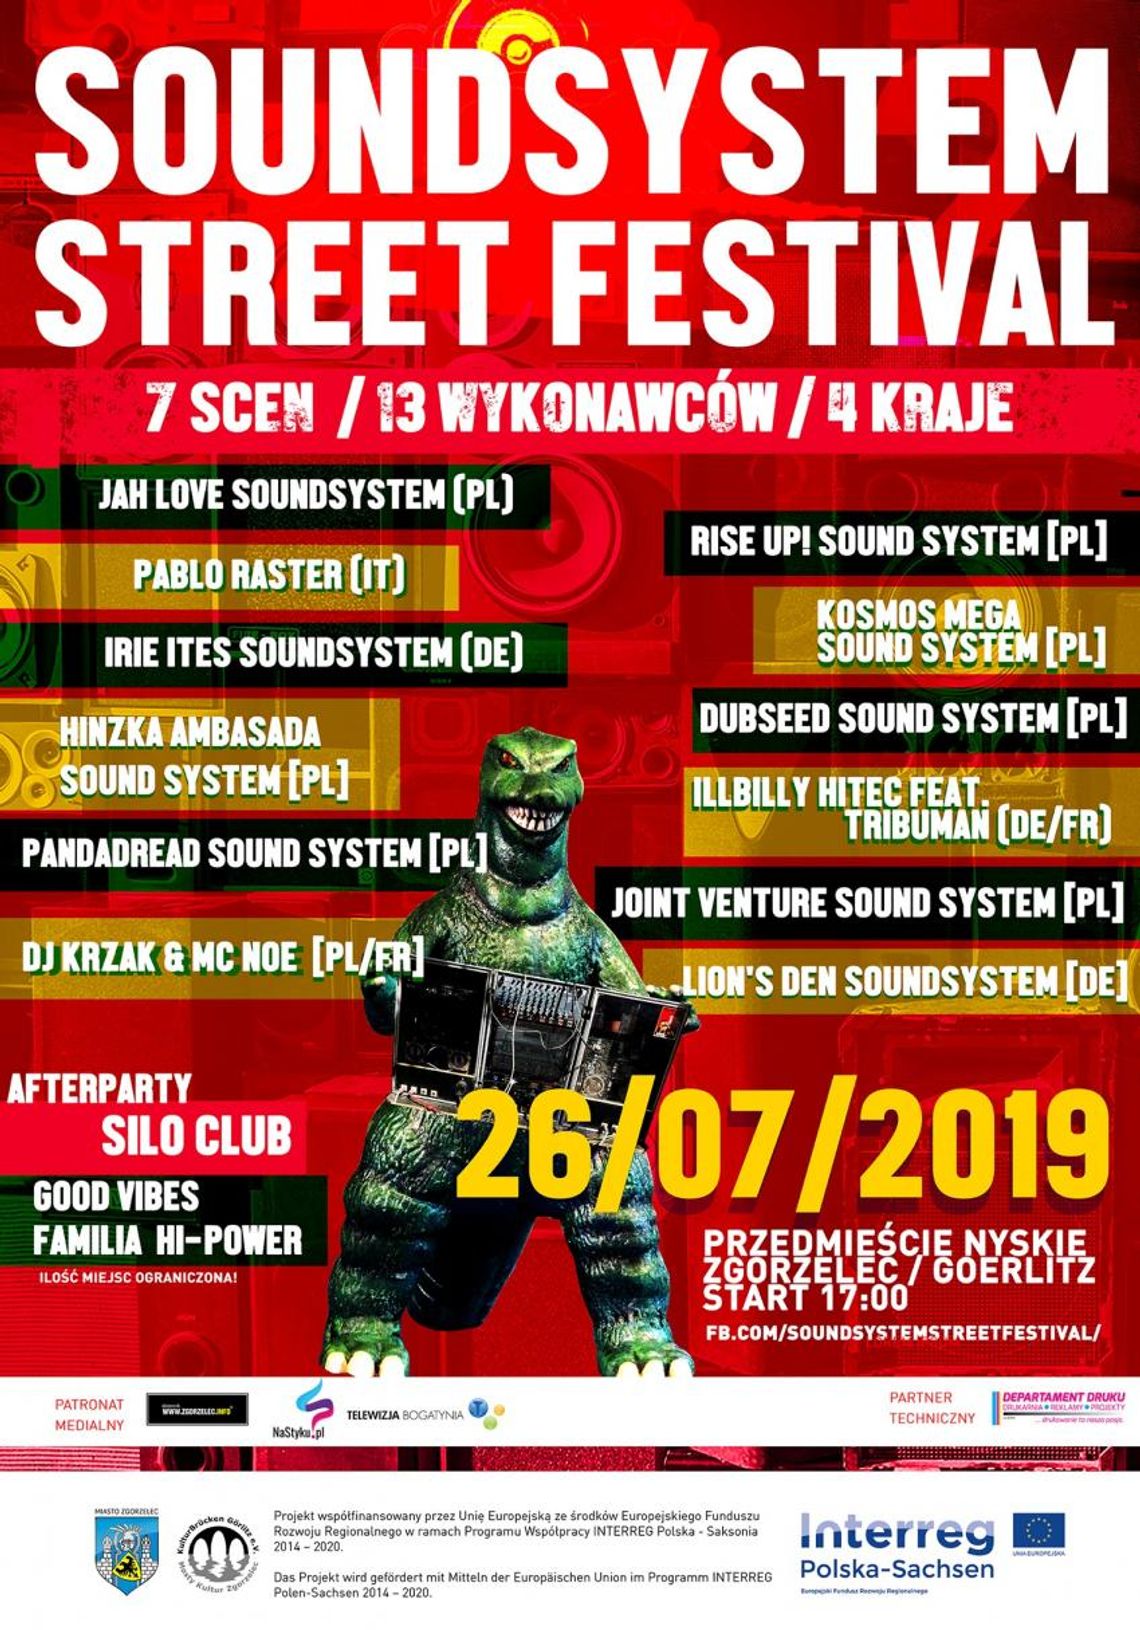 Soundsystem Street Festival Zgorzelec 2019: Program, artyści, termin